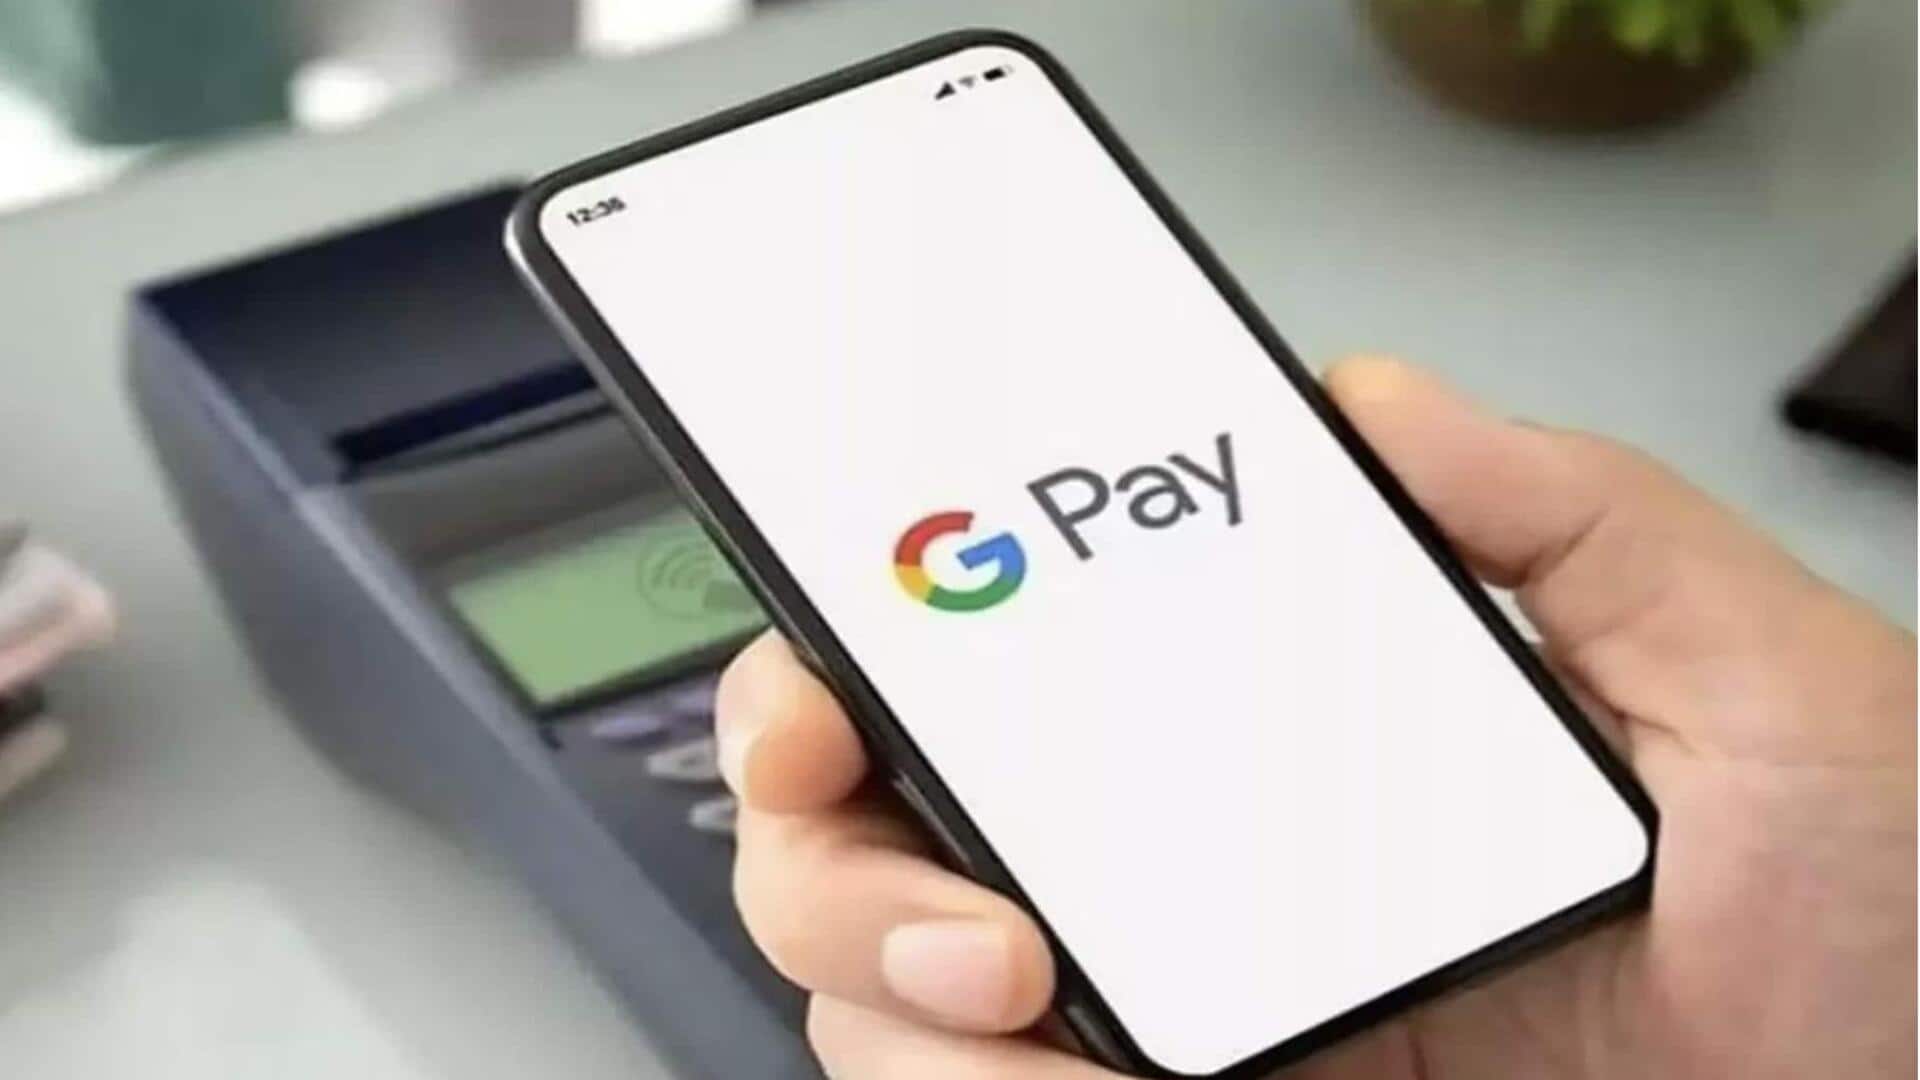 Amid Paytm crisis, Google Pay expands its UPI soundbox